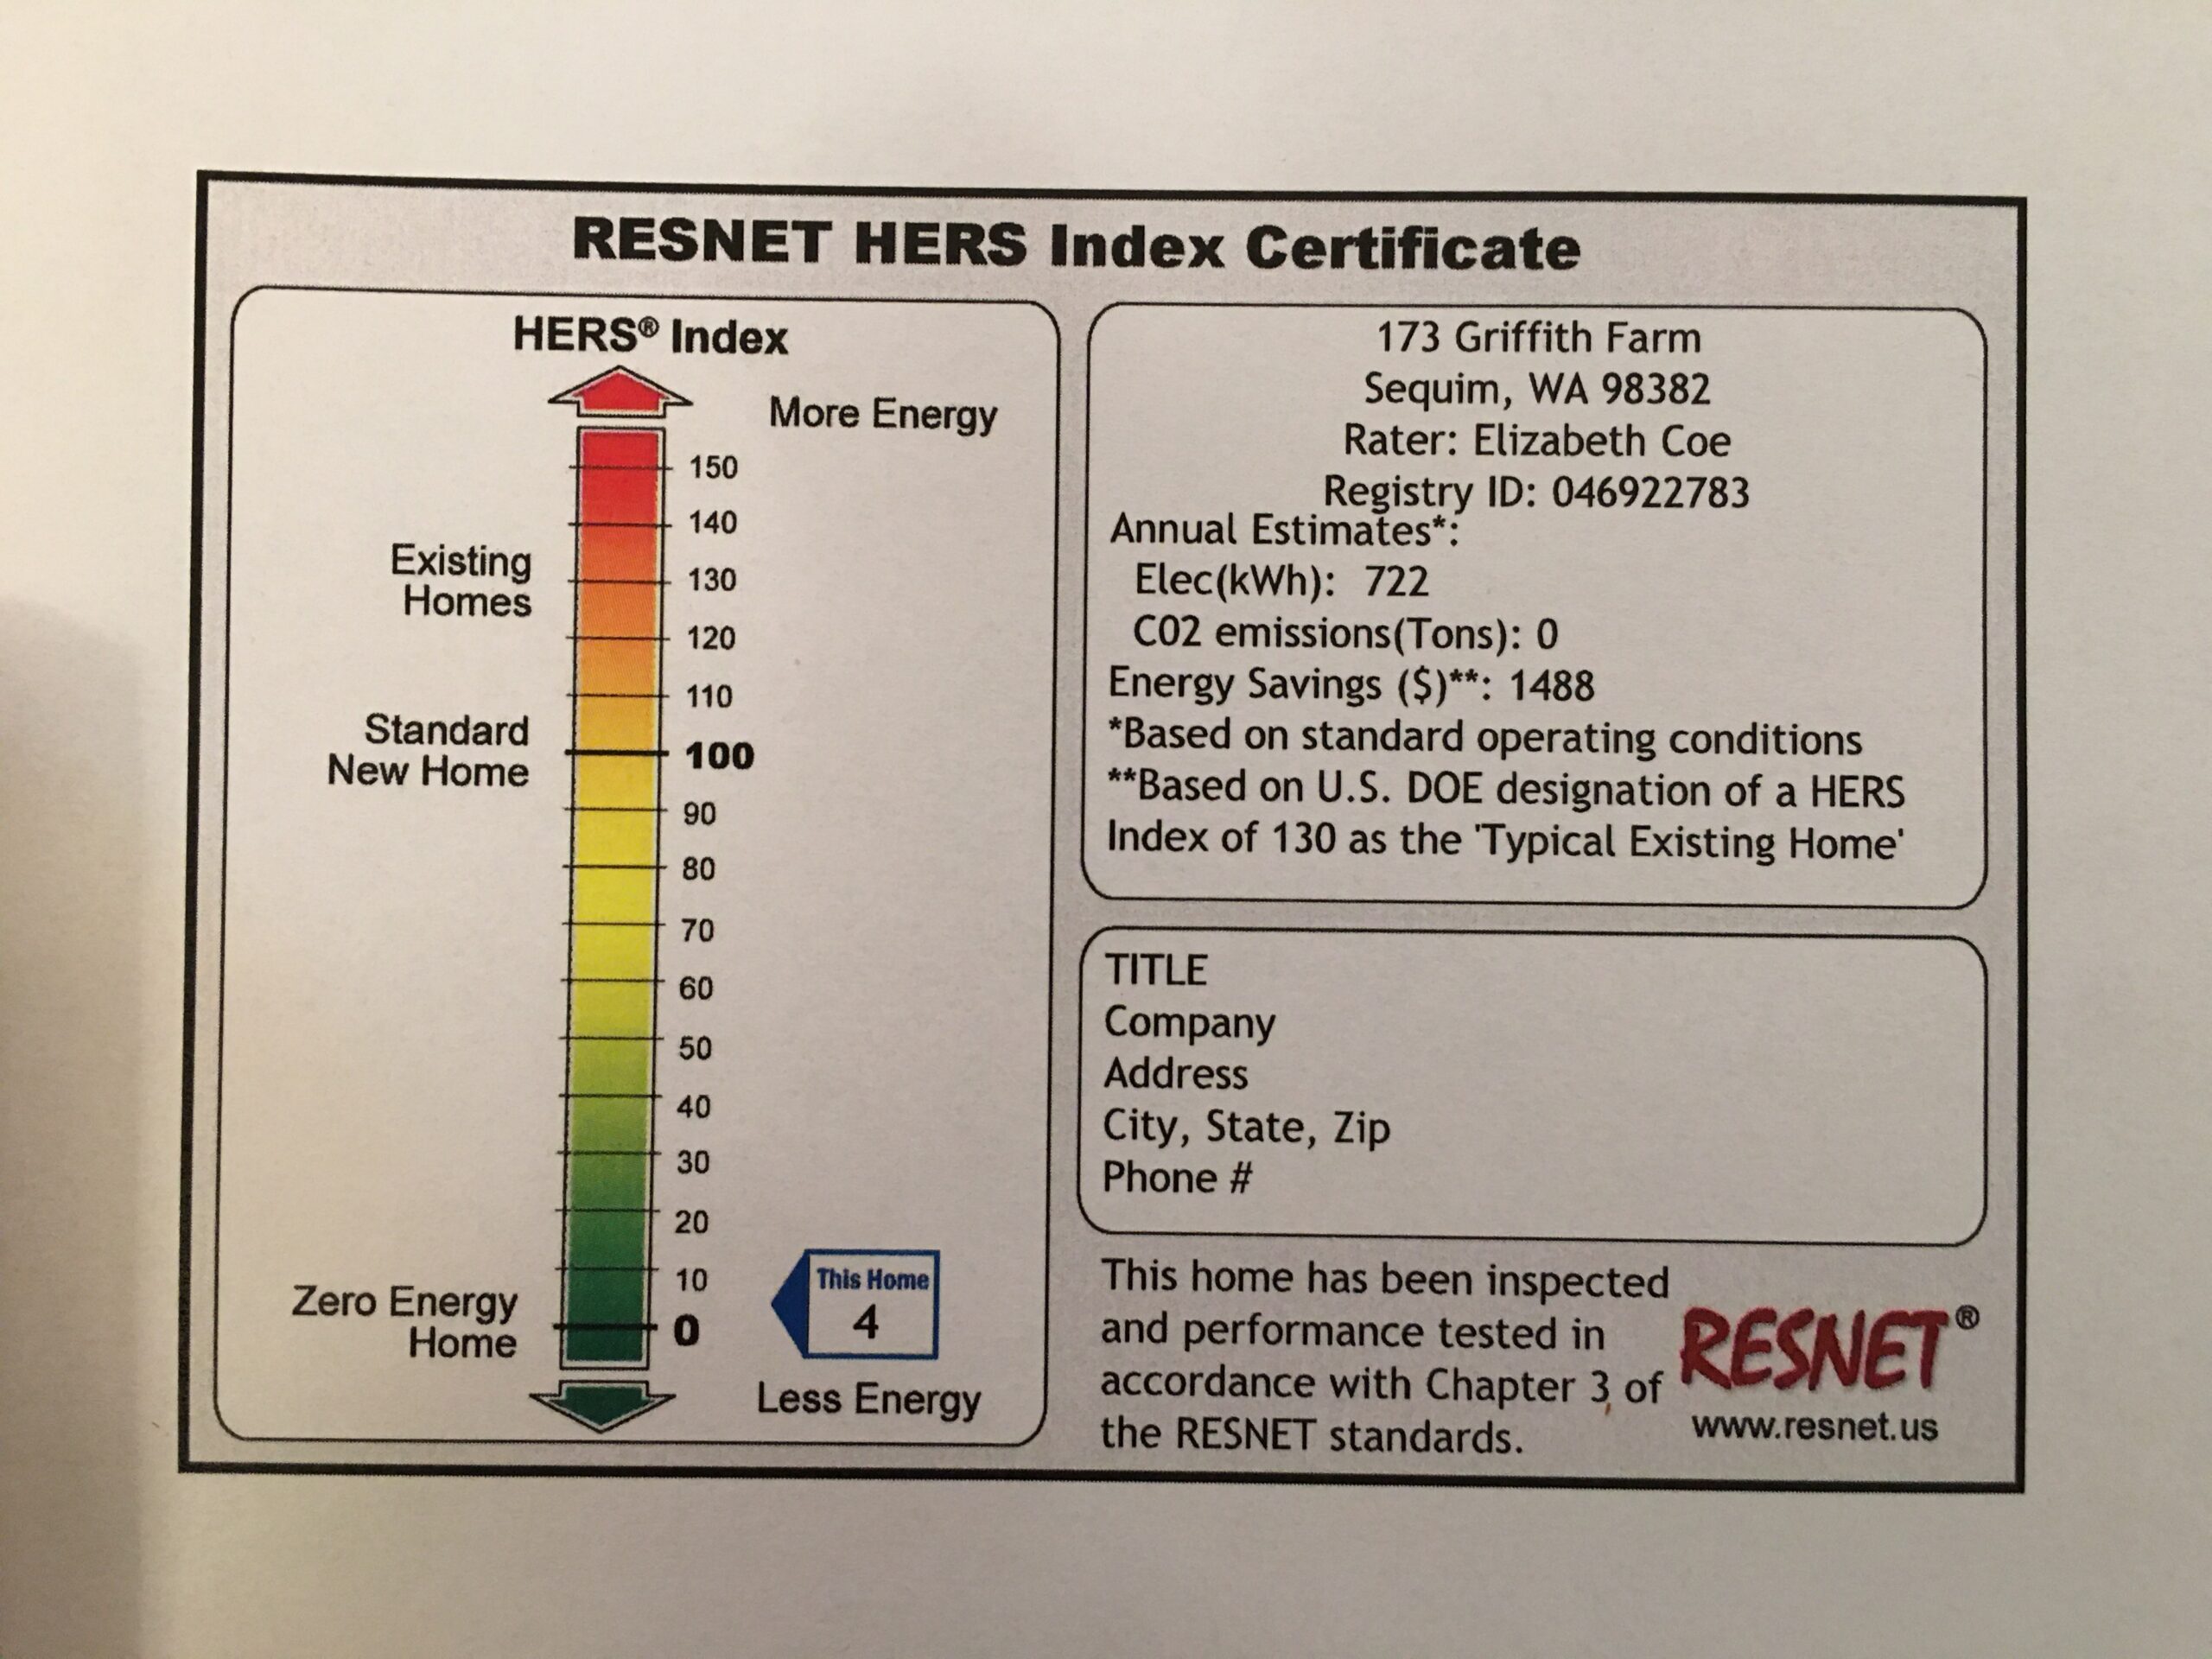 Resnet HERS Index Certificate